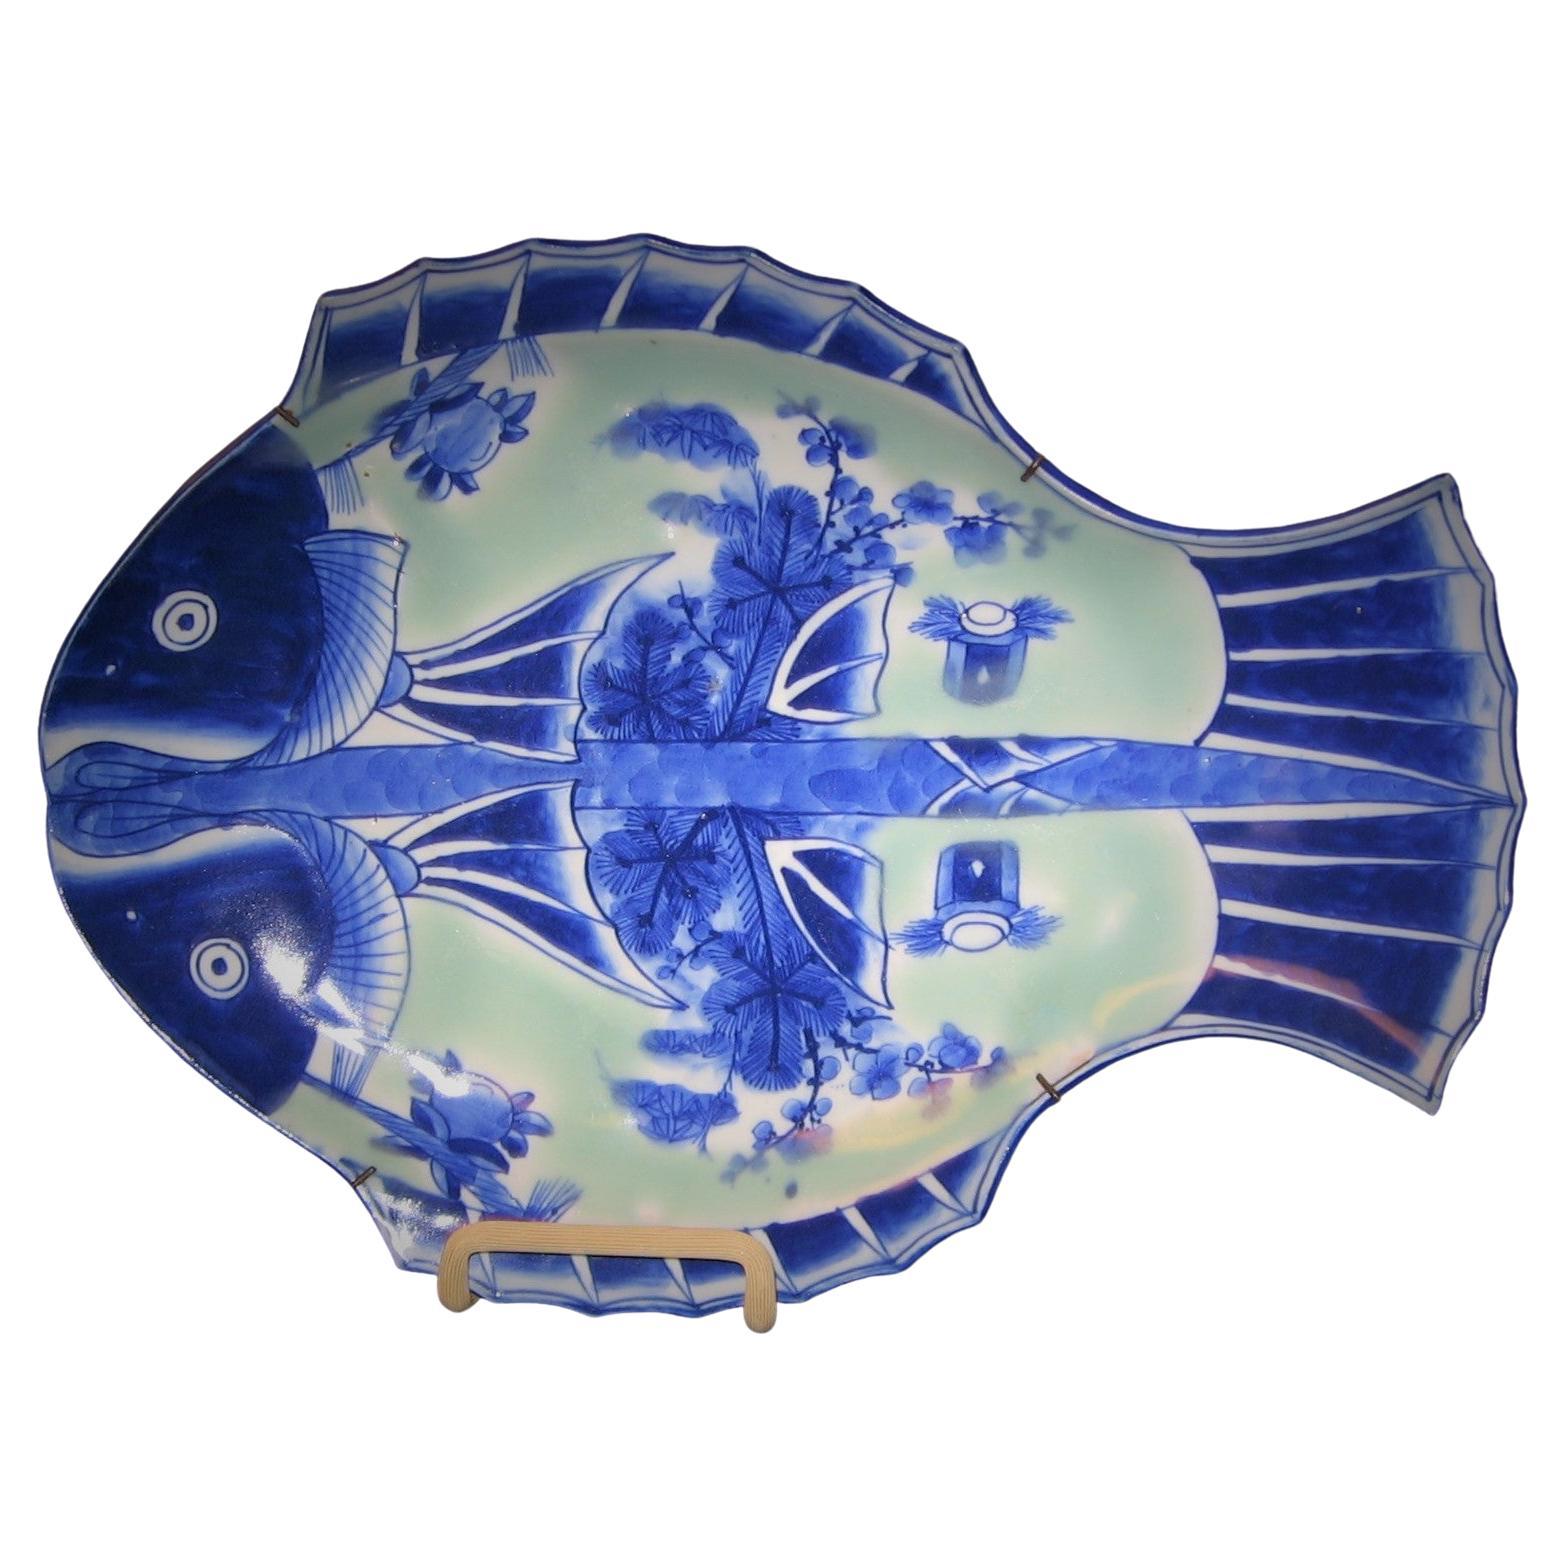 19th Century Japanese Celadon & Blue Fish Shaped Serving Tray